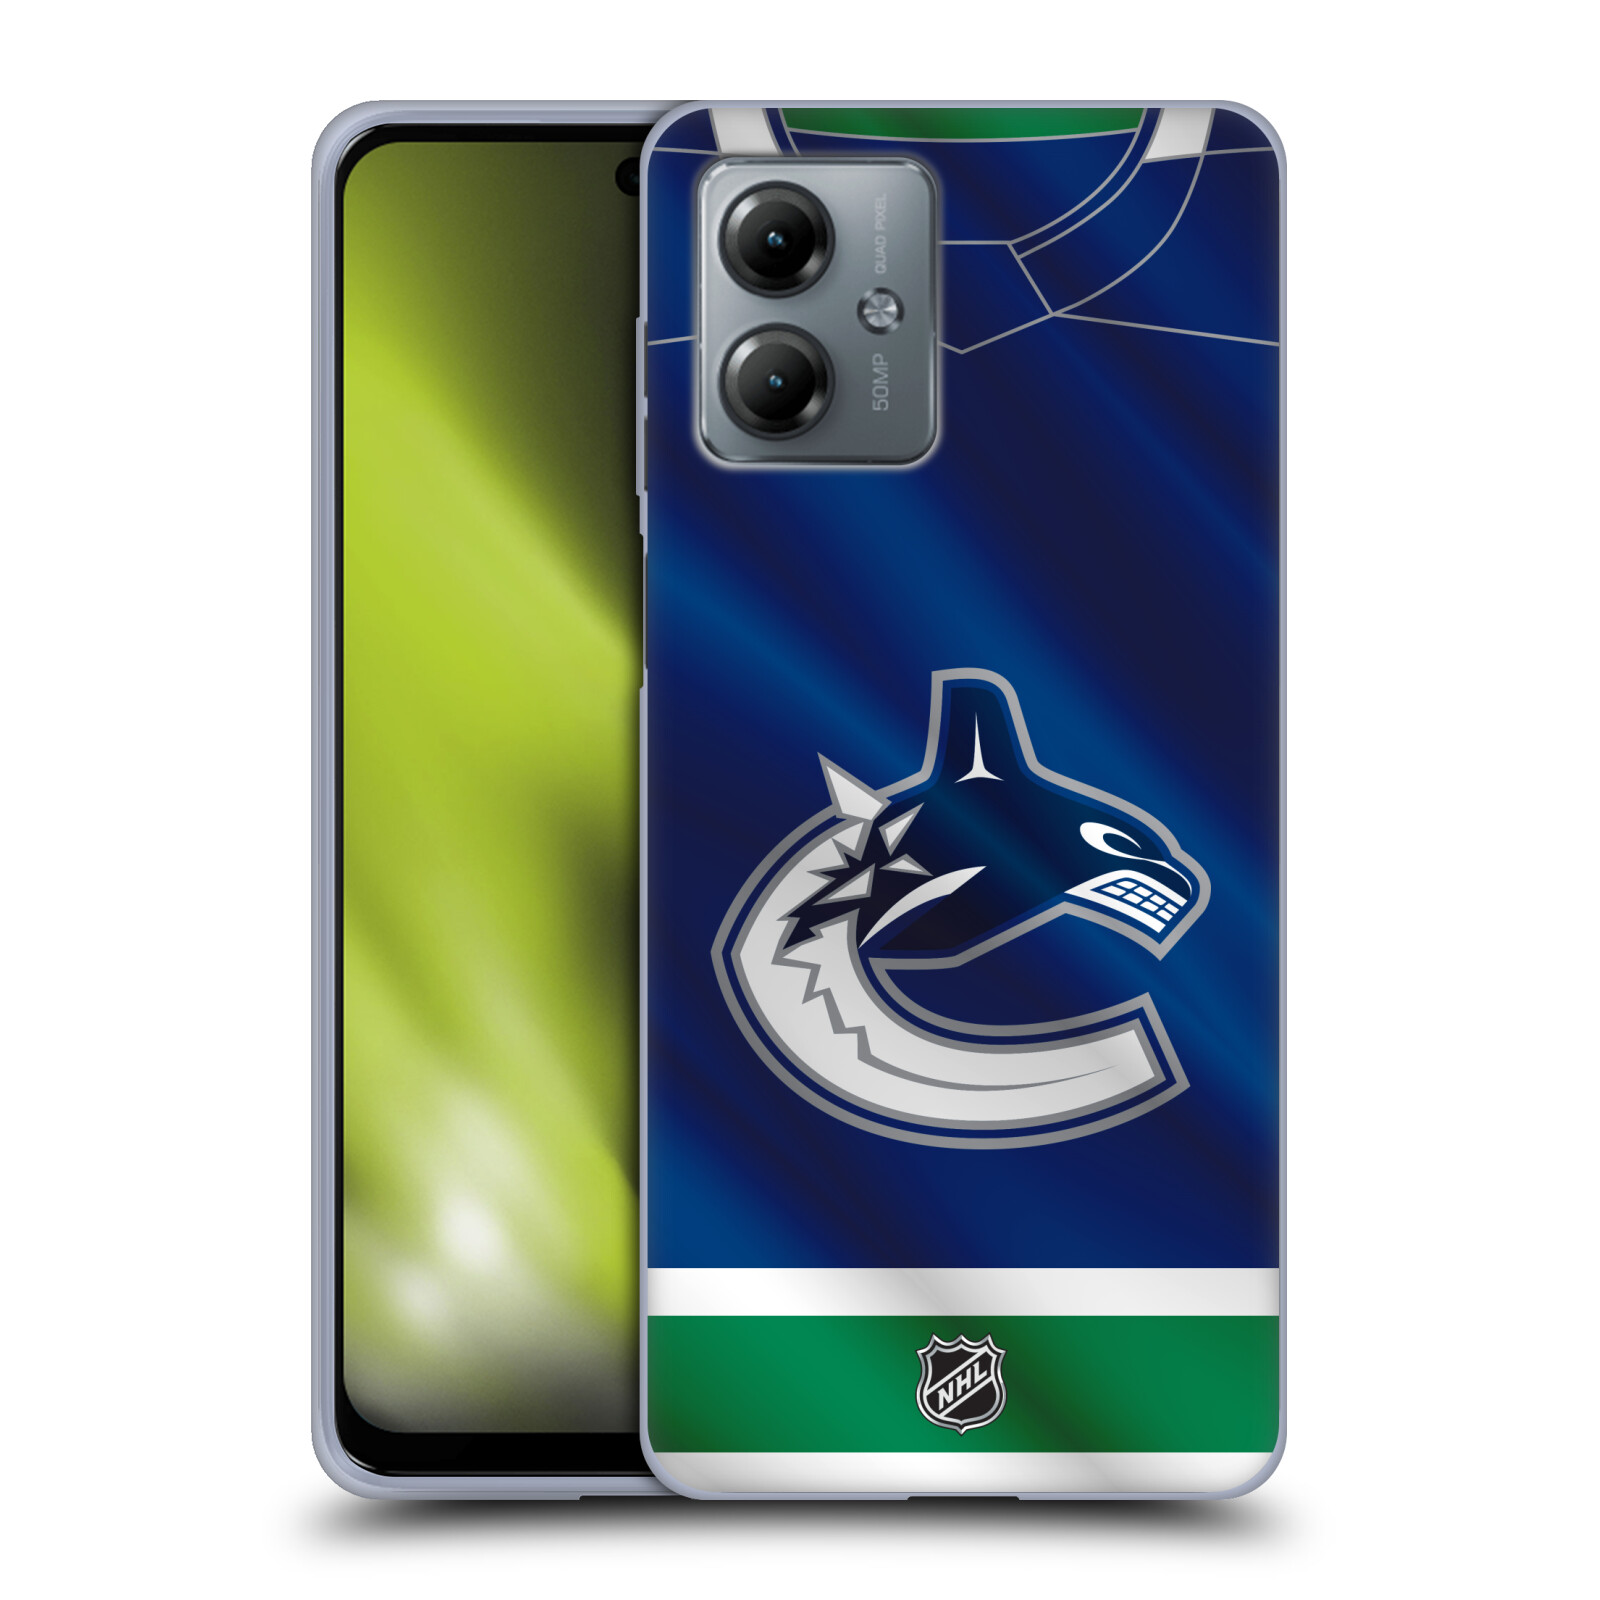 Silikonové pouzdro na mobil Motorola Moto G14 - NHL - Dres Vancouver Canucks (Silikonový kryt, obal, pouzdro na mobilní telefon Motorola Moto G14 s licencovaným motivem NHL - Dres Vancouver Canucks)